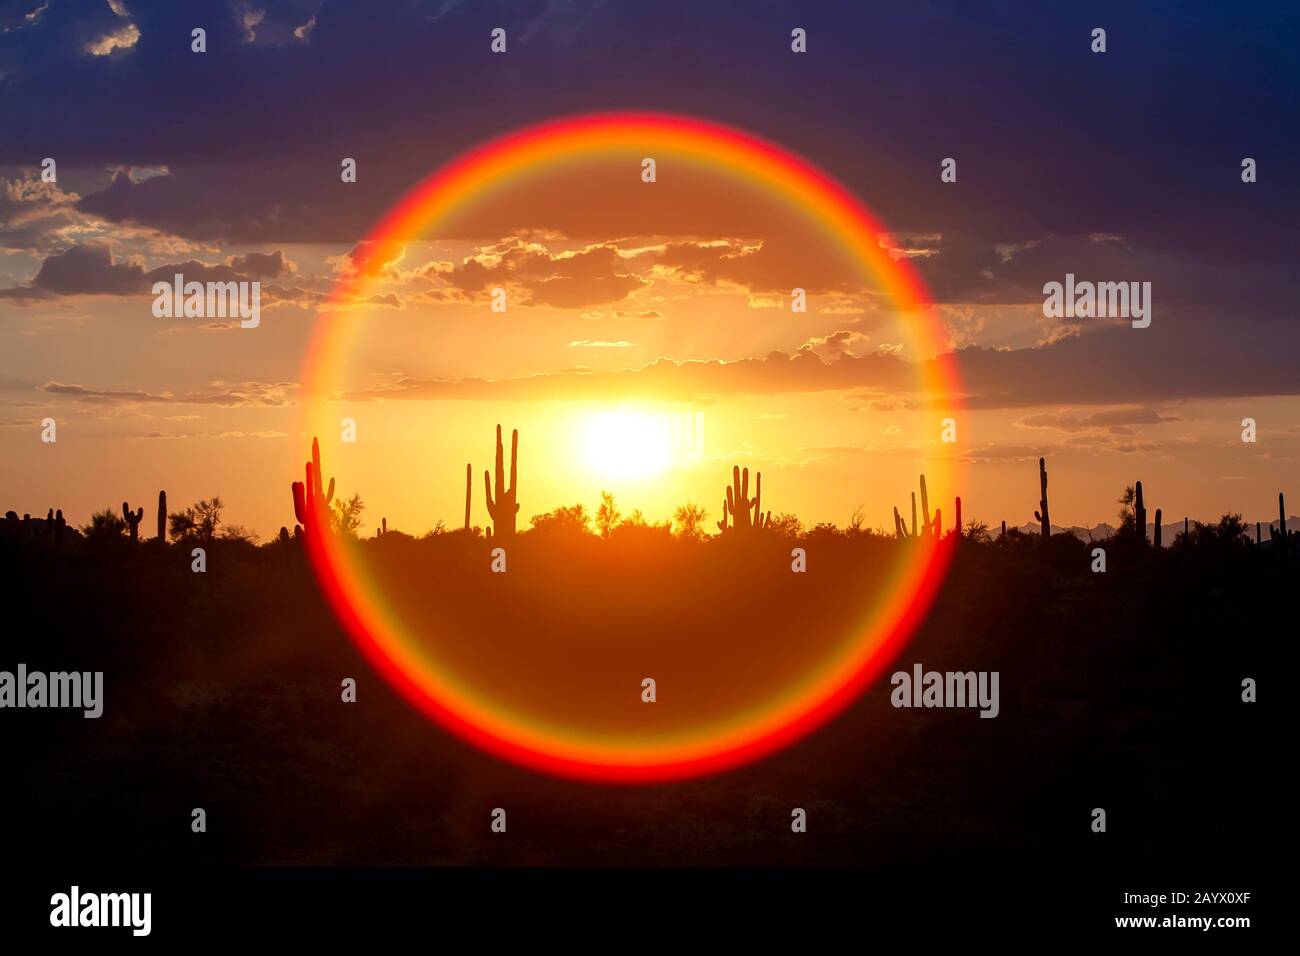 Sunset silhouetting saguaro cacti in the Sonoran desert near Phoenix Arizona, USA. Stock Photo